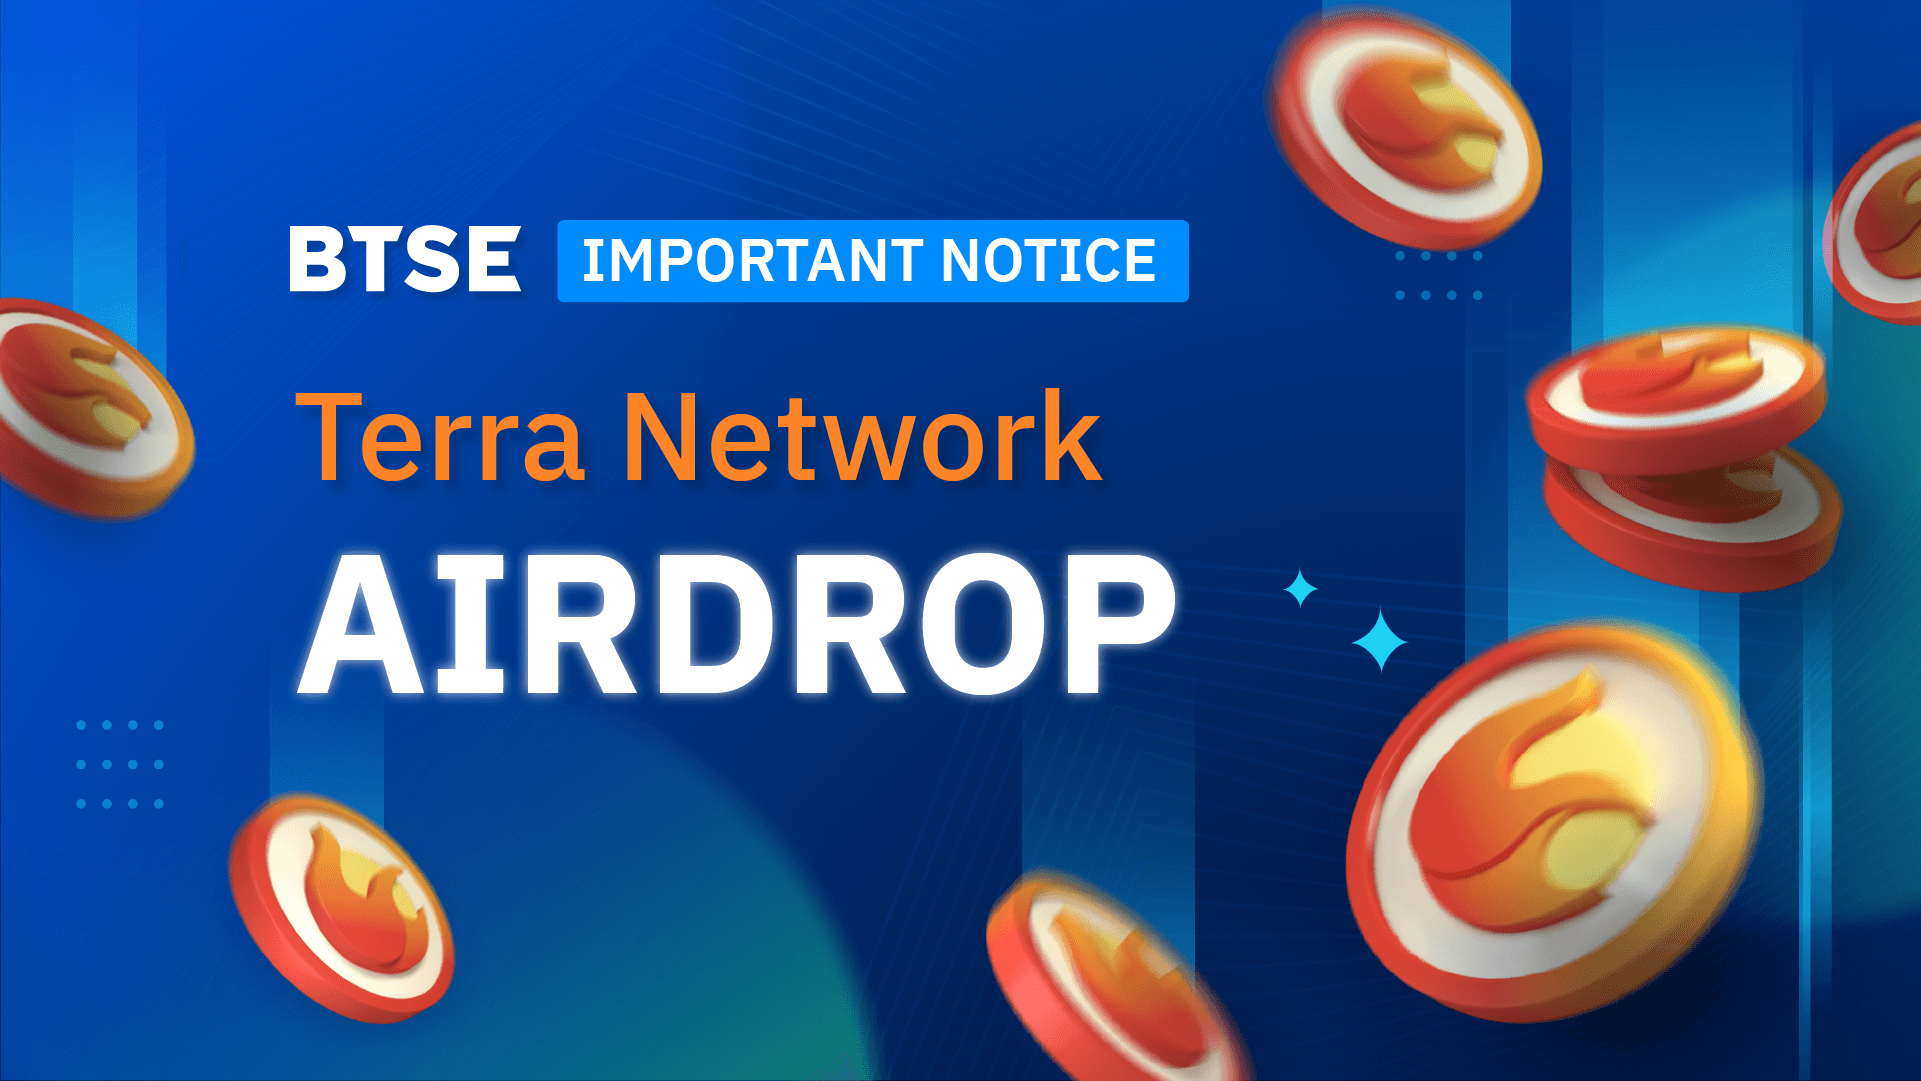 Important Notice: Terra Network Airdrop